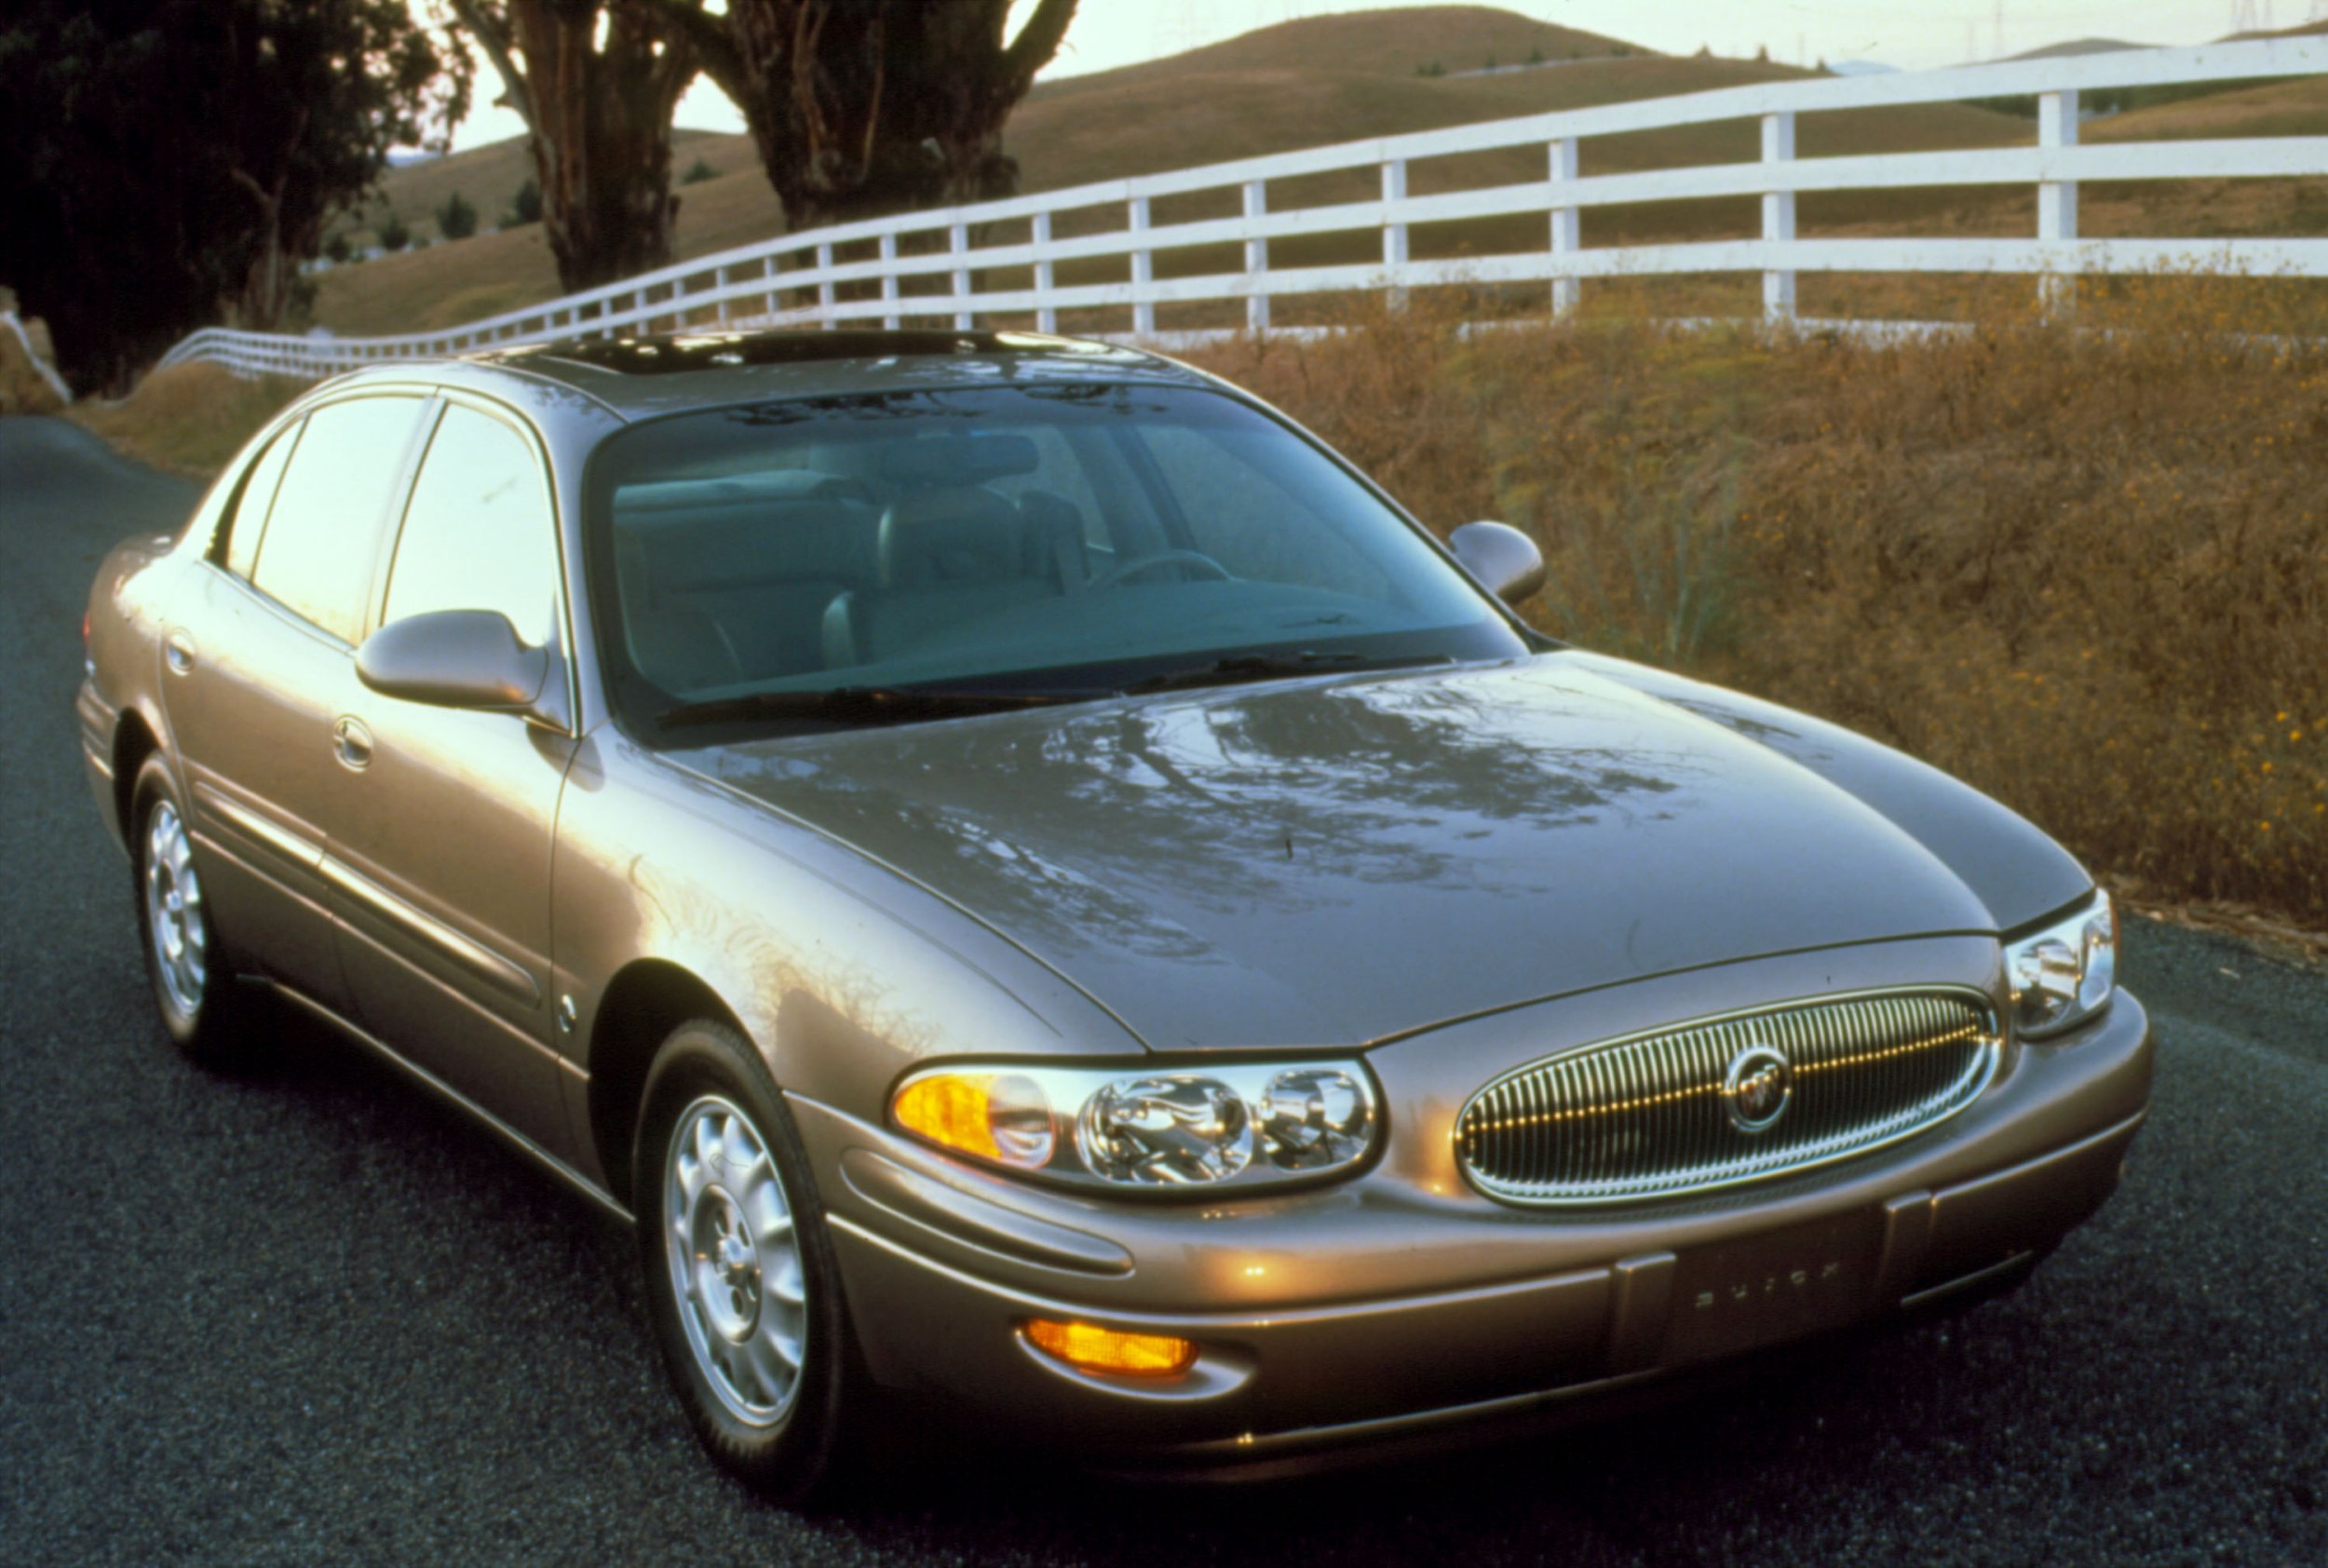 2000 год на продажу. Buick lesabre 1999. Buick 2000. Бьюик машина 2000. Buick lesabre 2003.